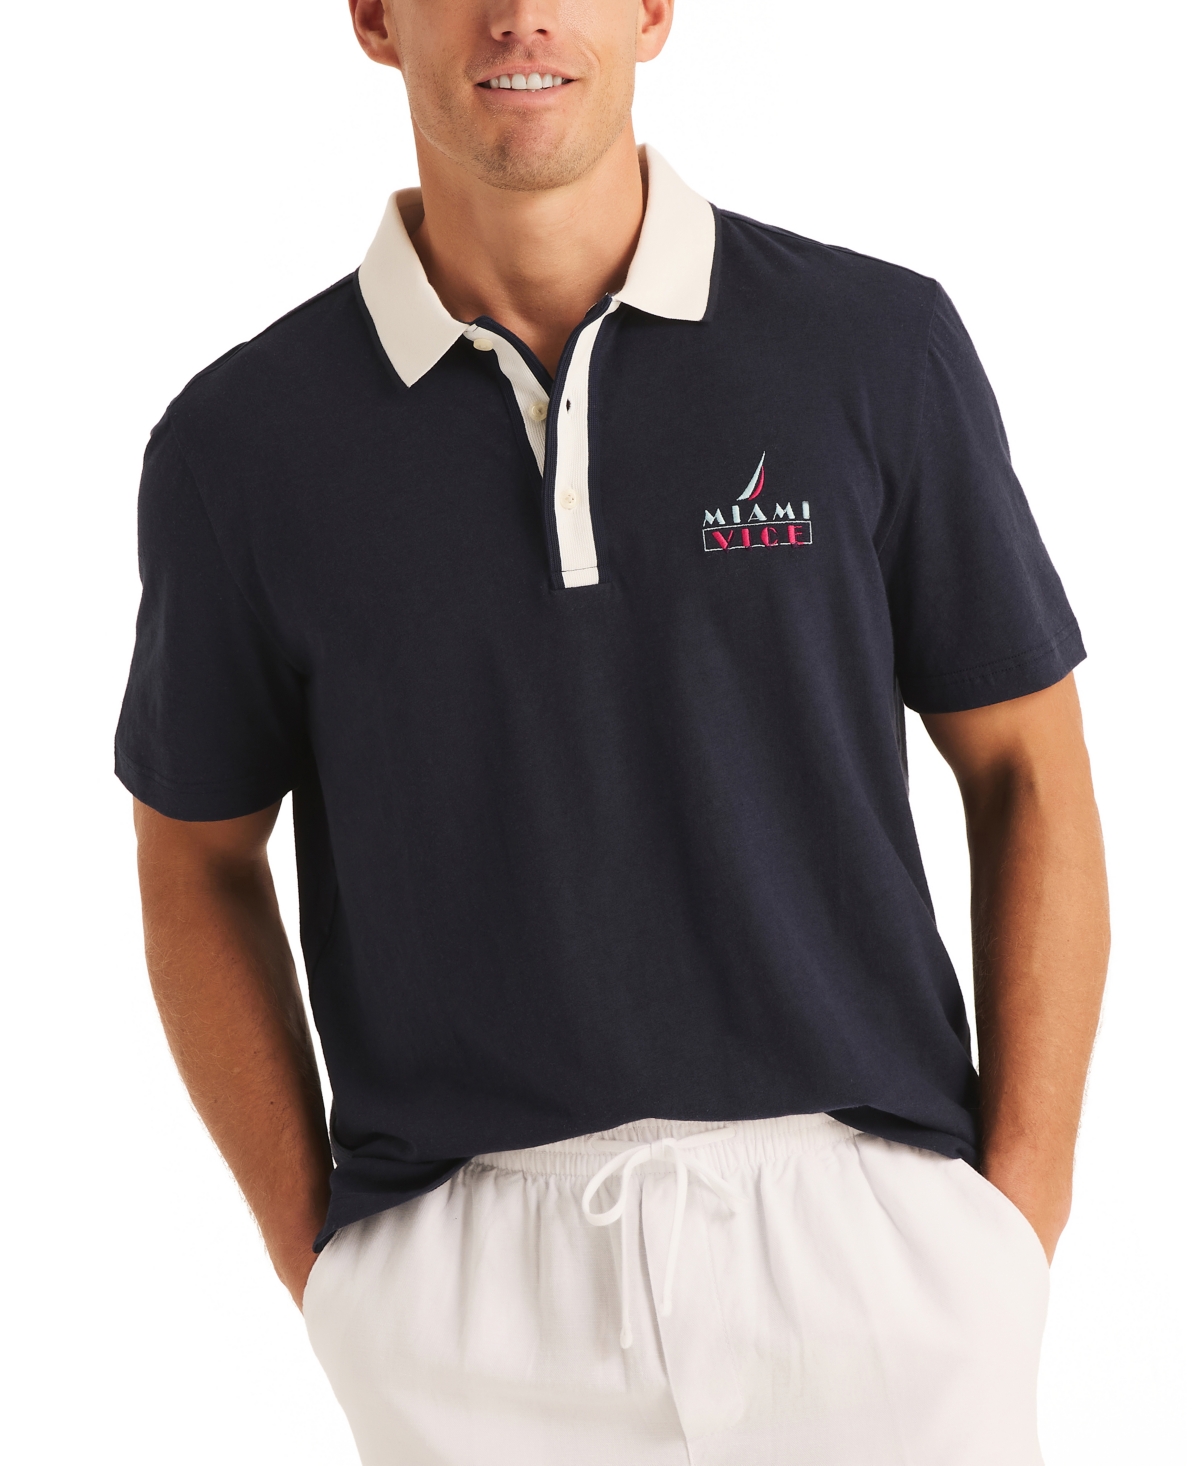 Men's Miami Vice x Nautica Short-Sleeve Contrast-Trim Polo Shirt - Navy Seas